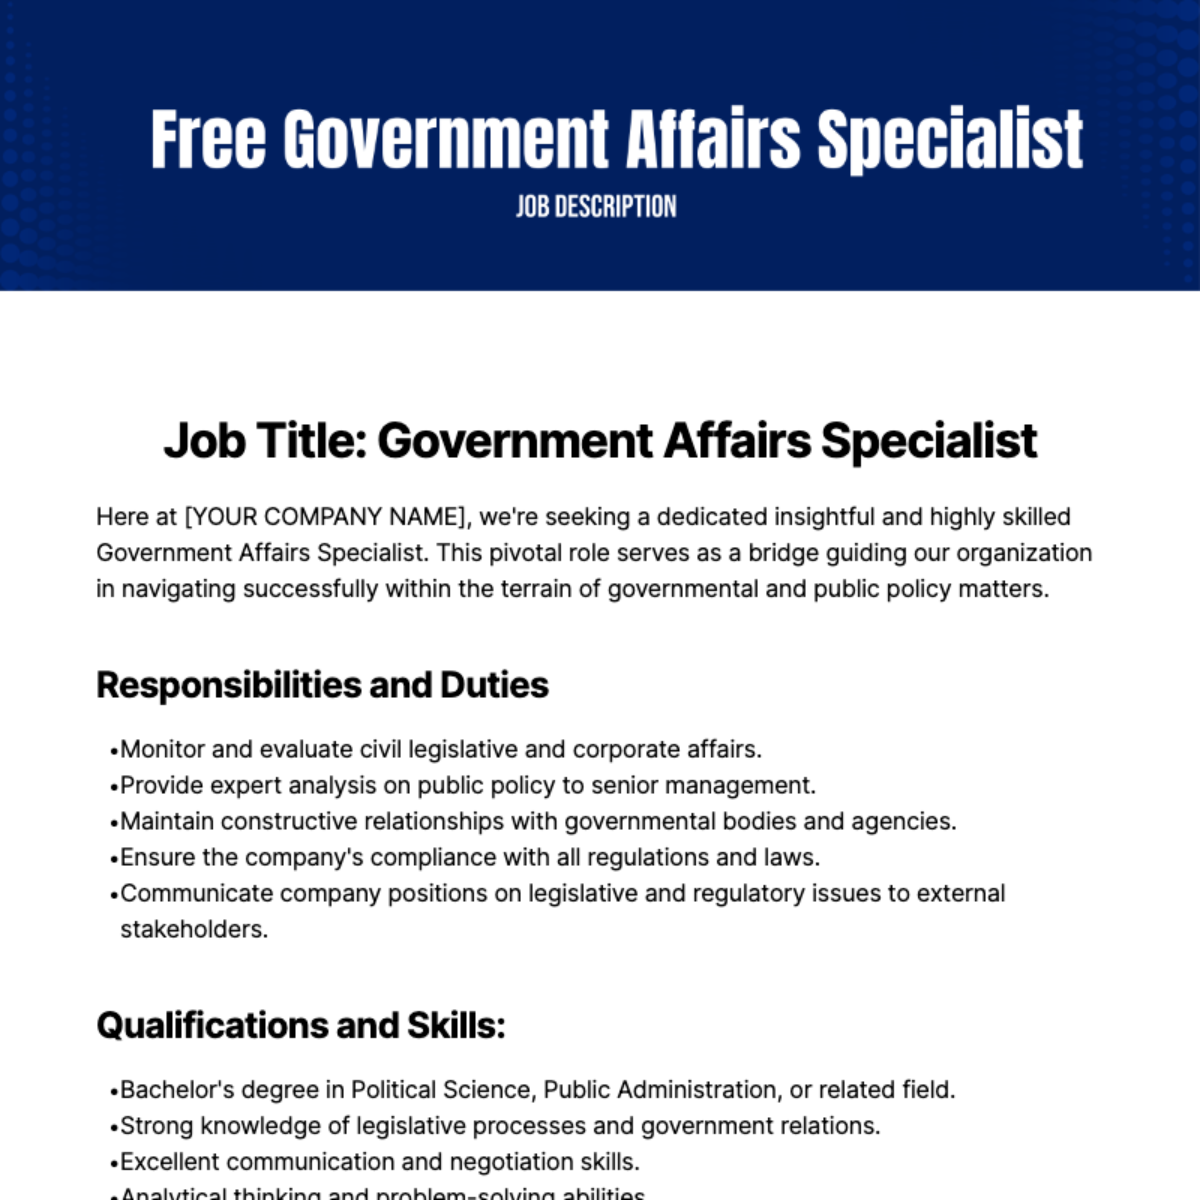 Government Affairs Specialist Job Description Template